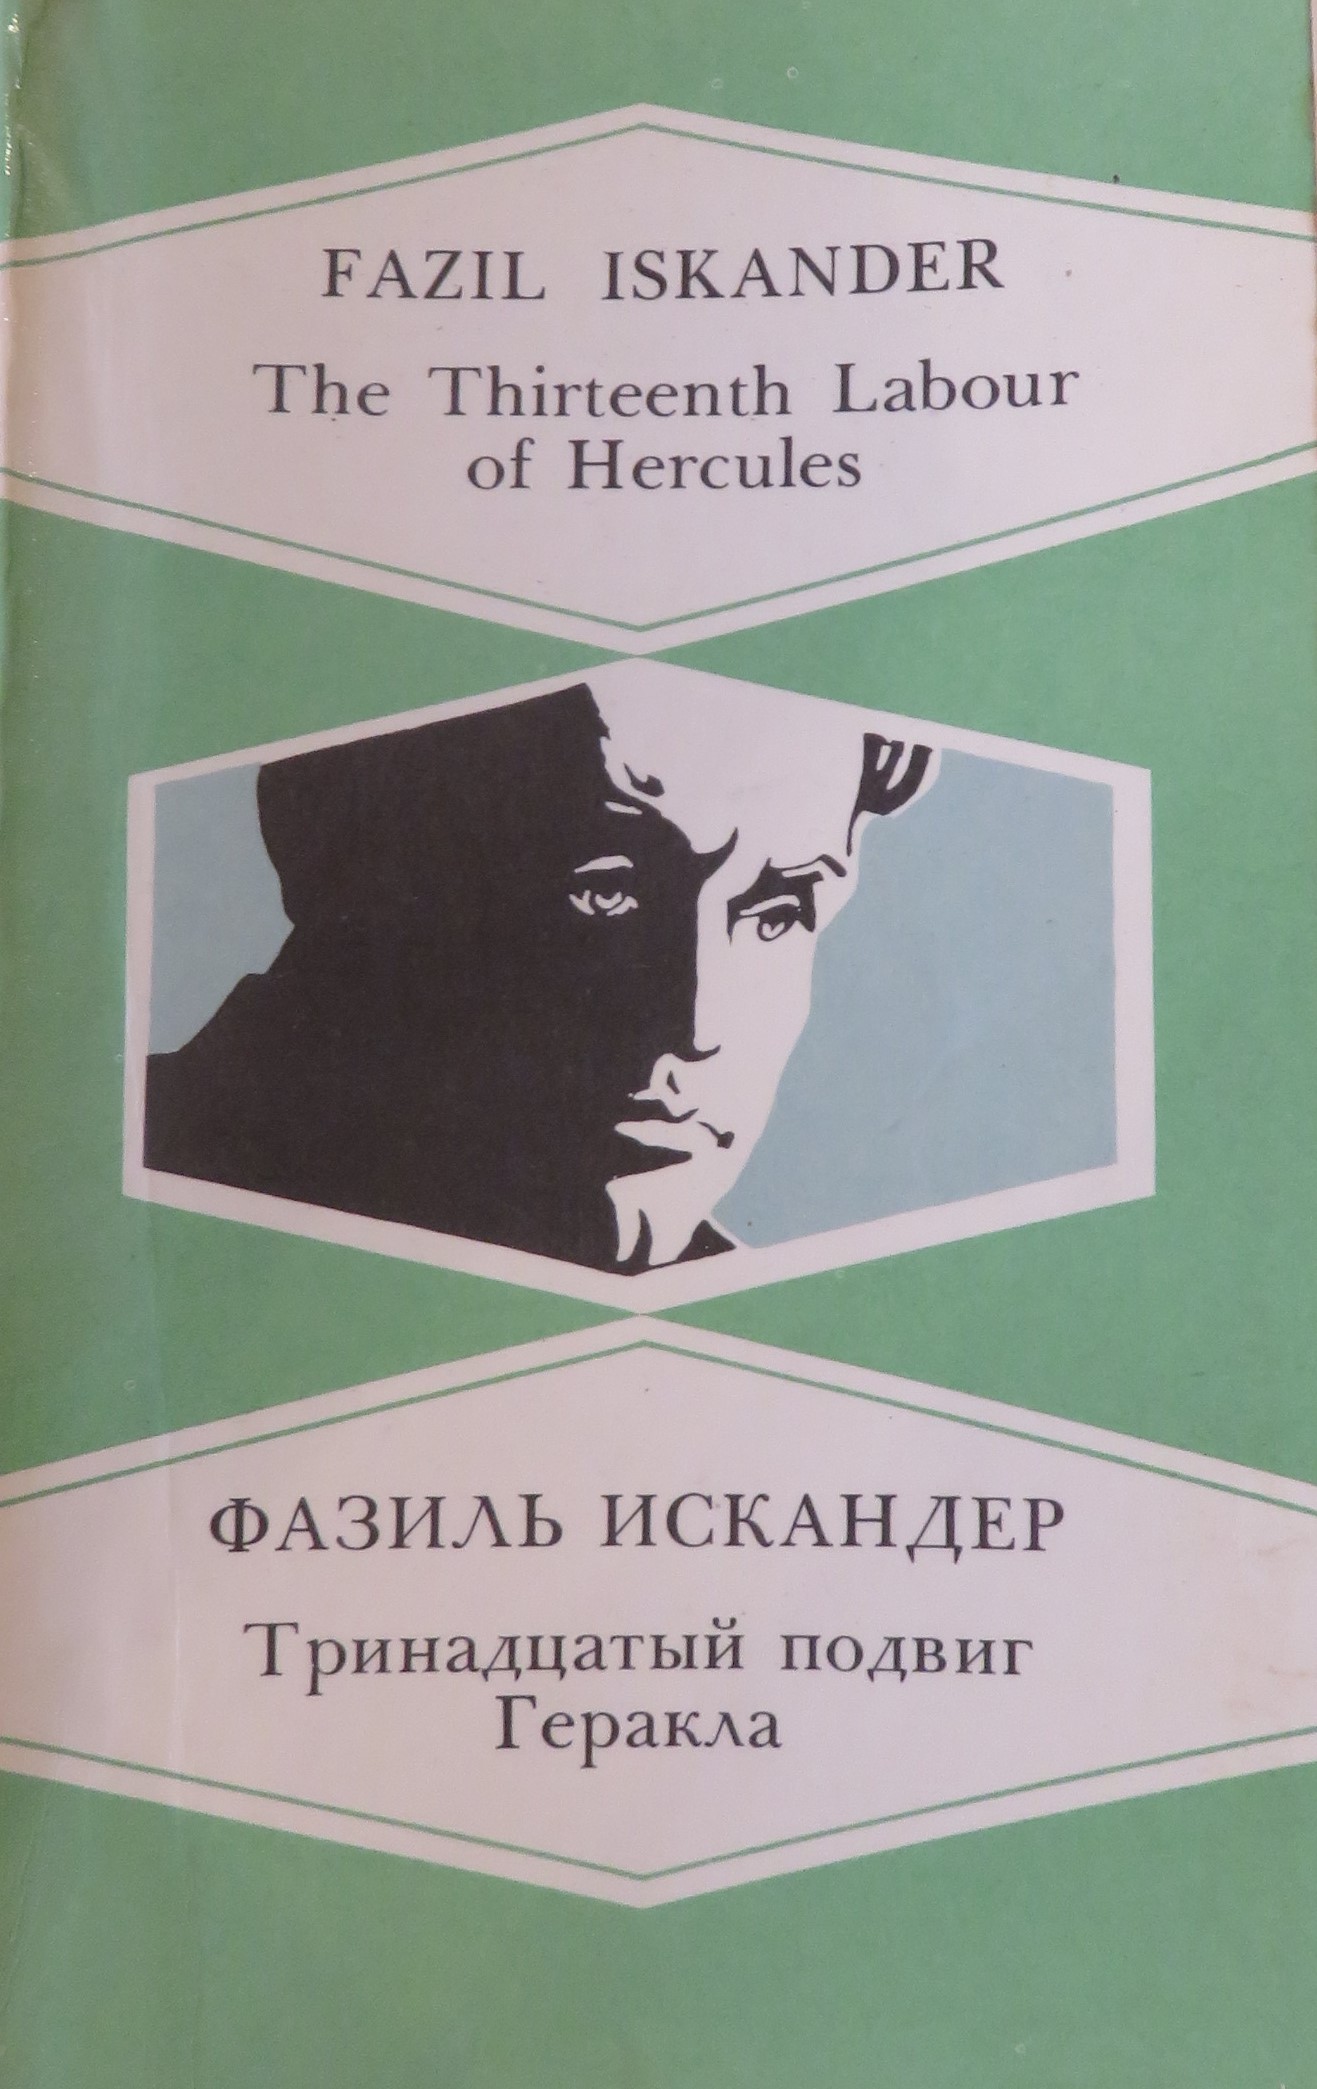 The Thirteenth Labour of Hercules